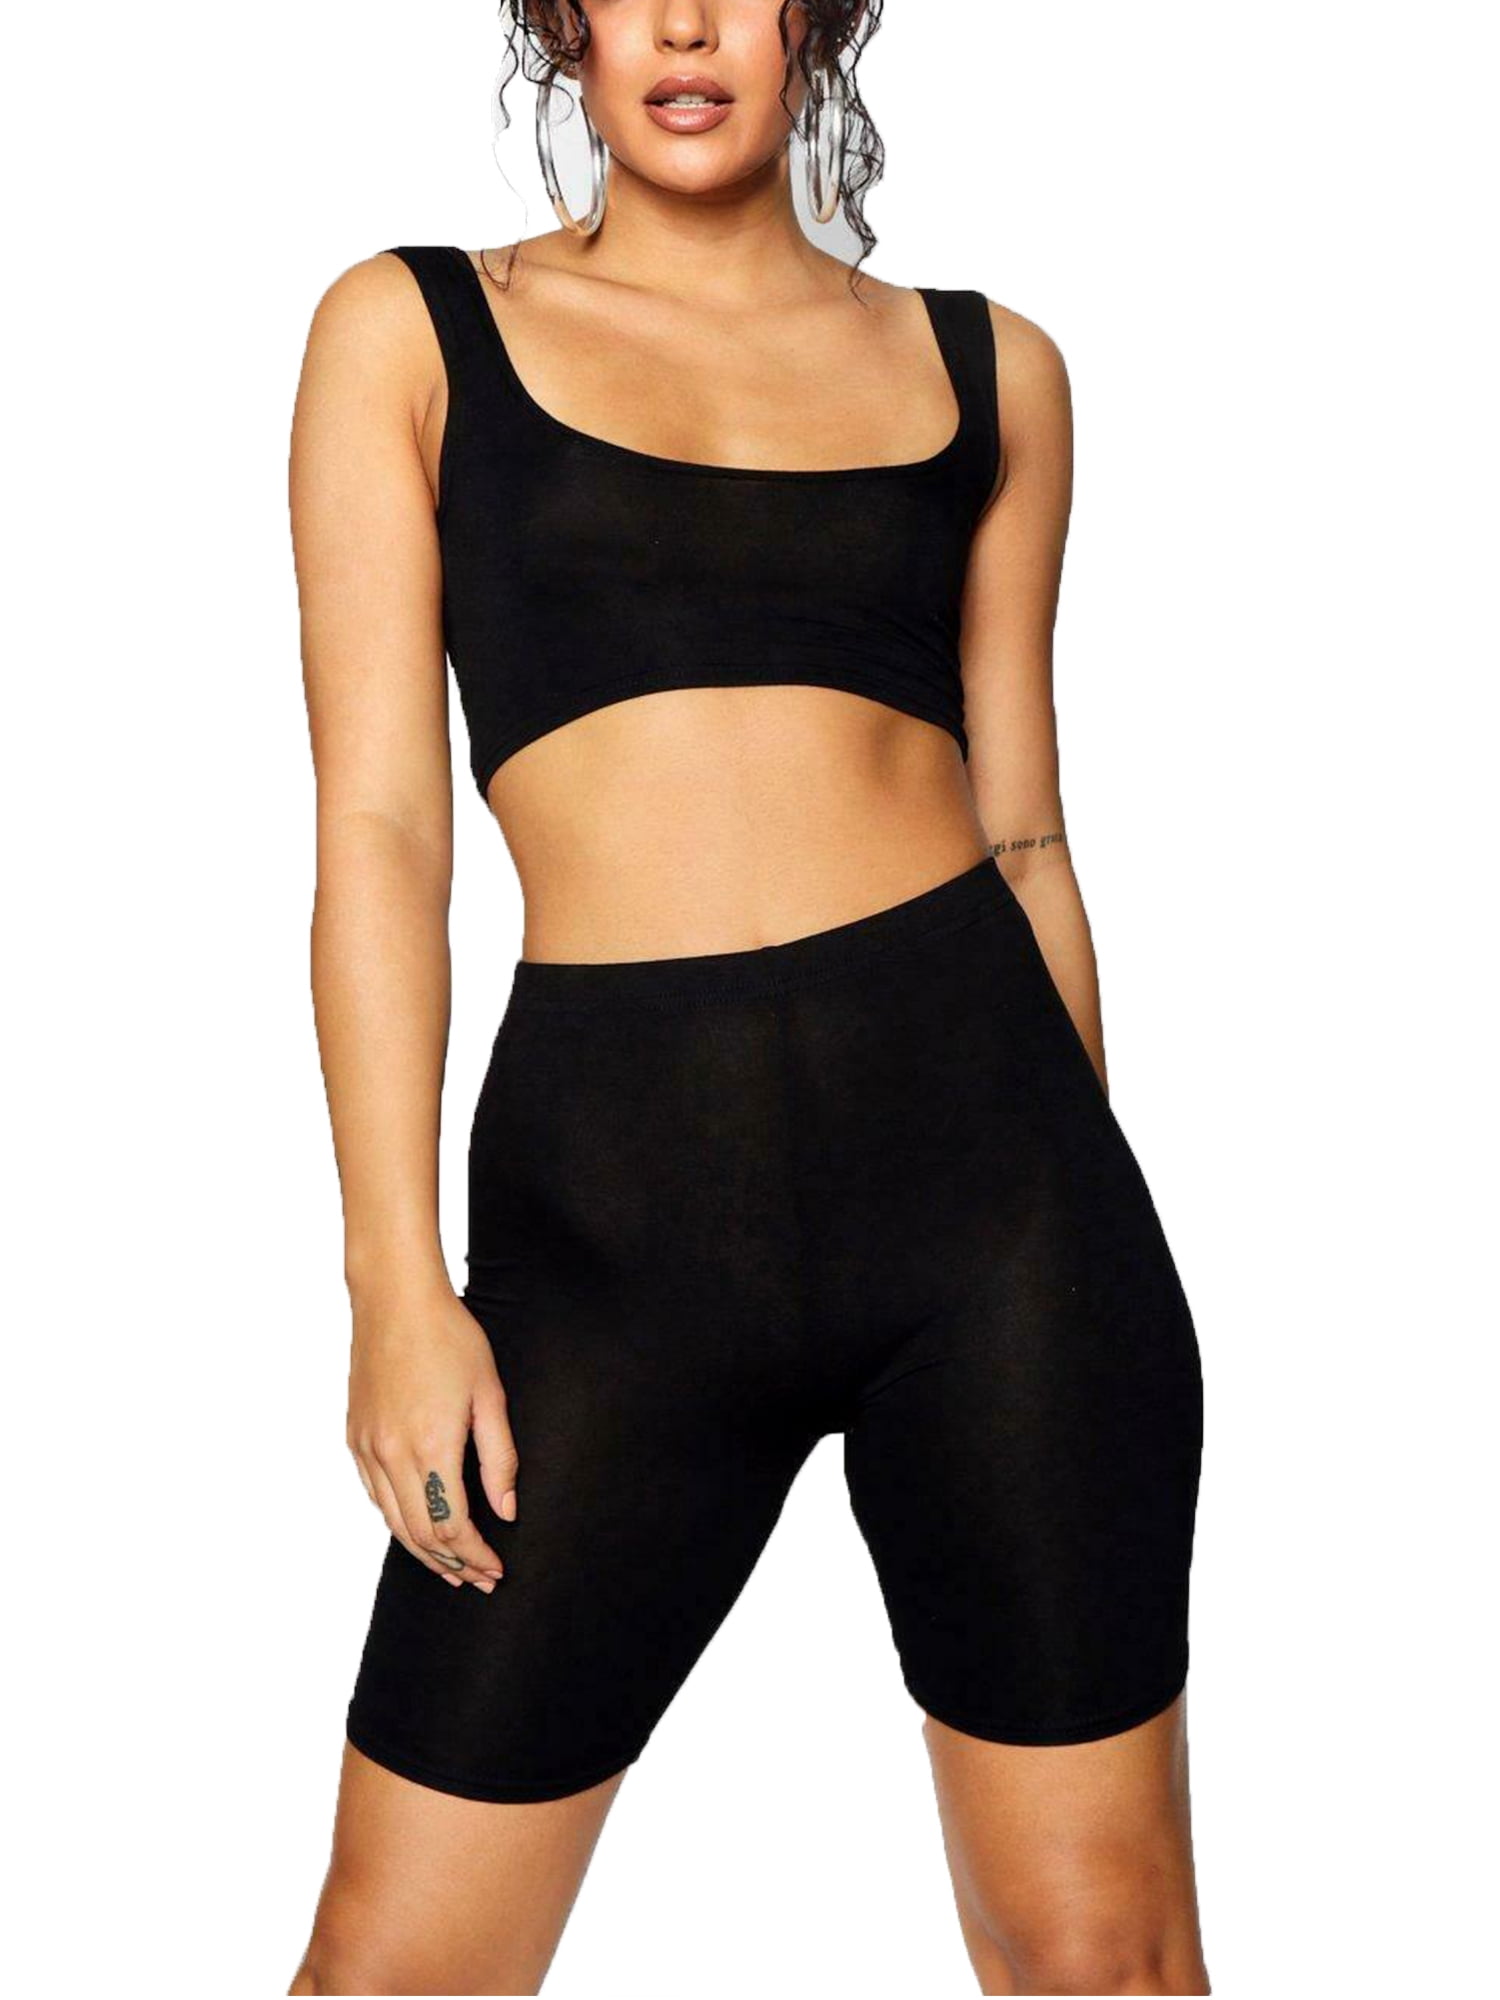 New Ladies Ribbed Stretchy Activewear Dance Gym Yoga Cycling Shorts Tight Pants